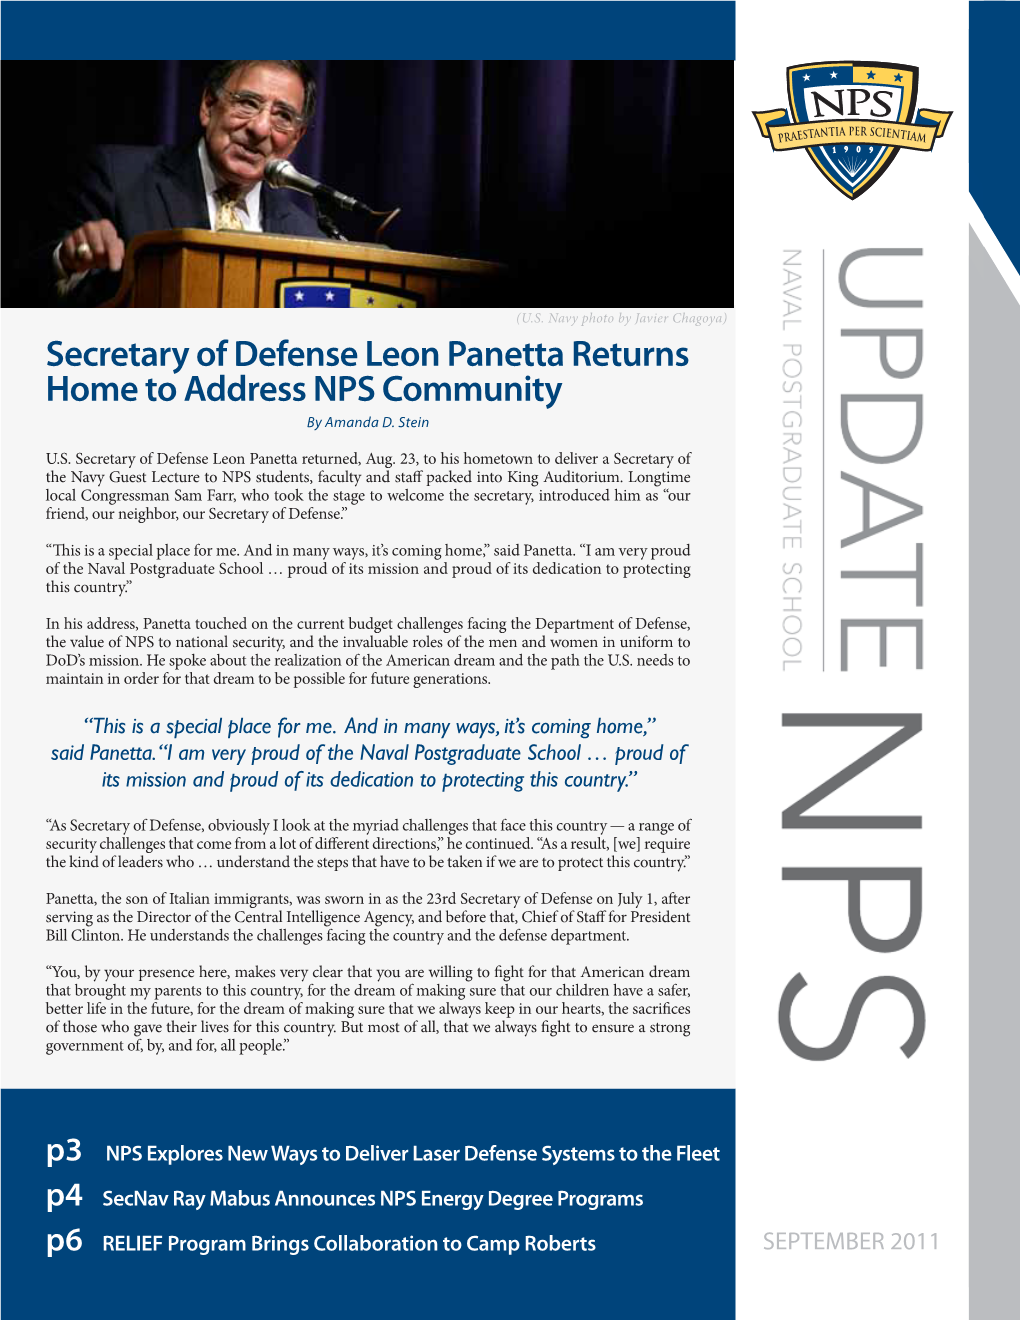 Secretary of Defense Leon Panetta Returns Home to Address NPS Community by Amanda D